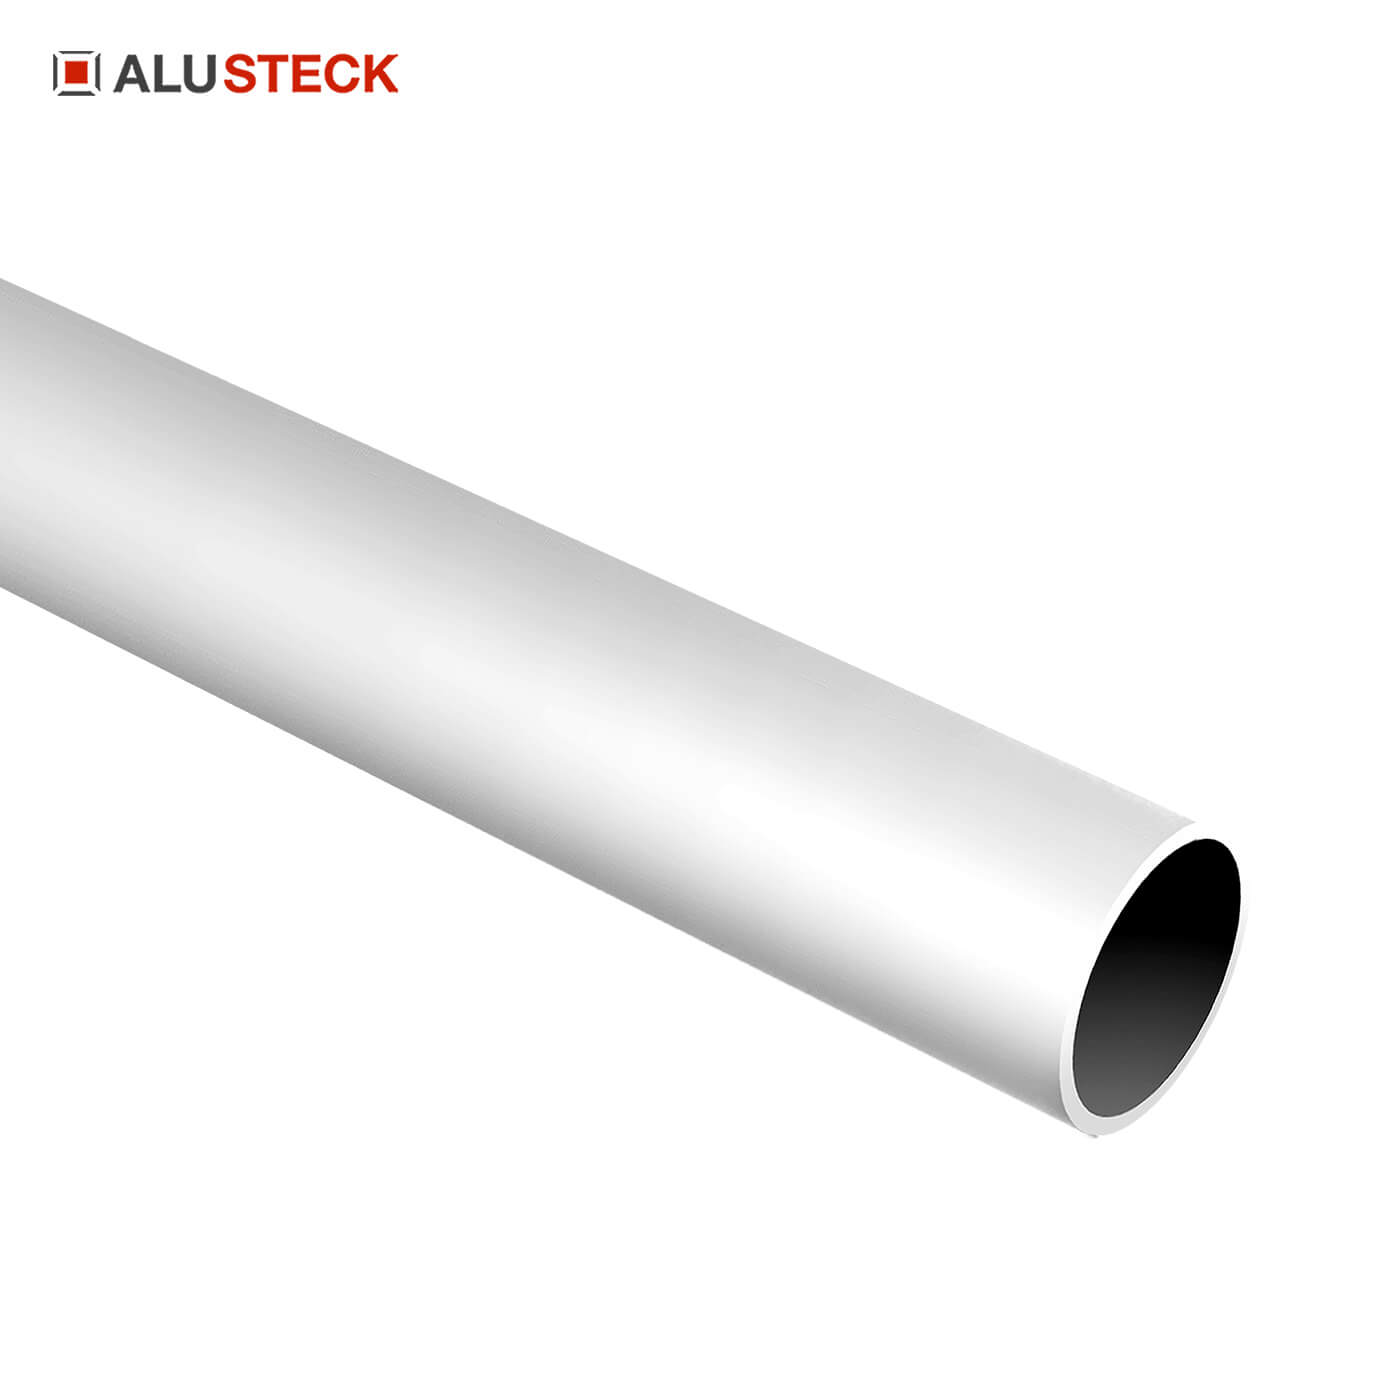 Aluminiumrohr JRspec alu S-förmig Außendurchmesser 16-102mm